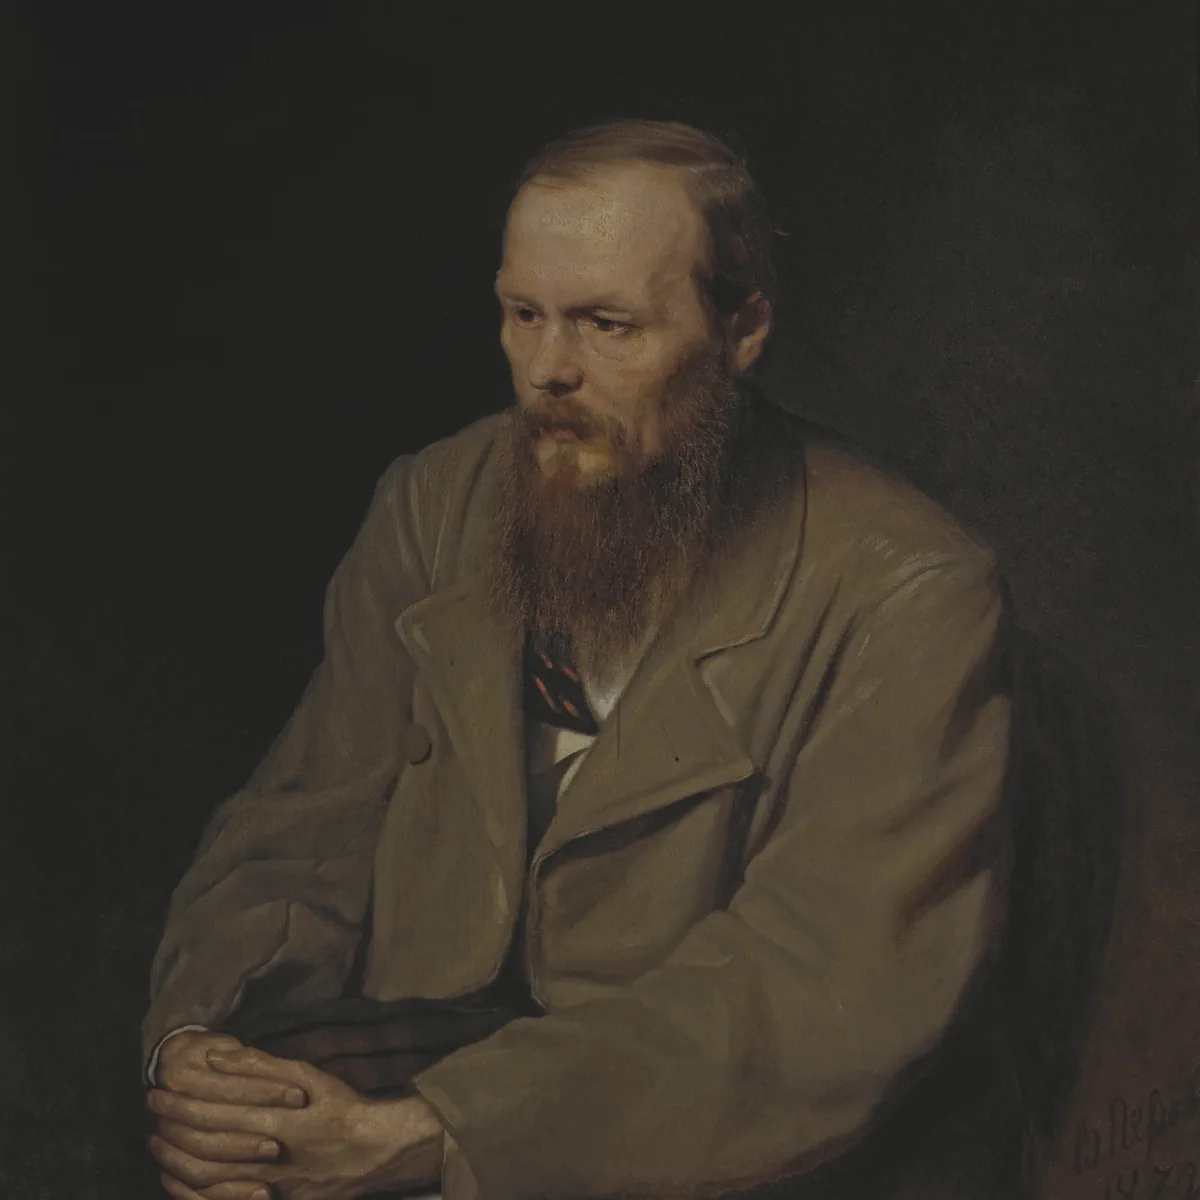 fyodor dostoevsky